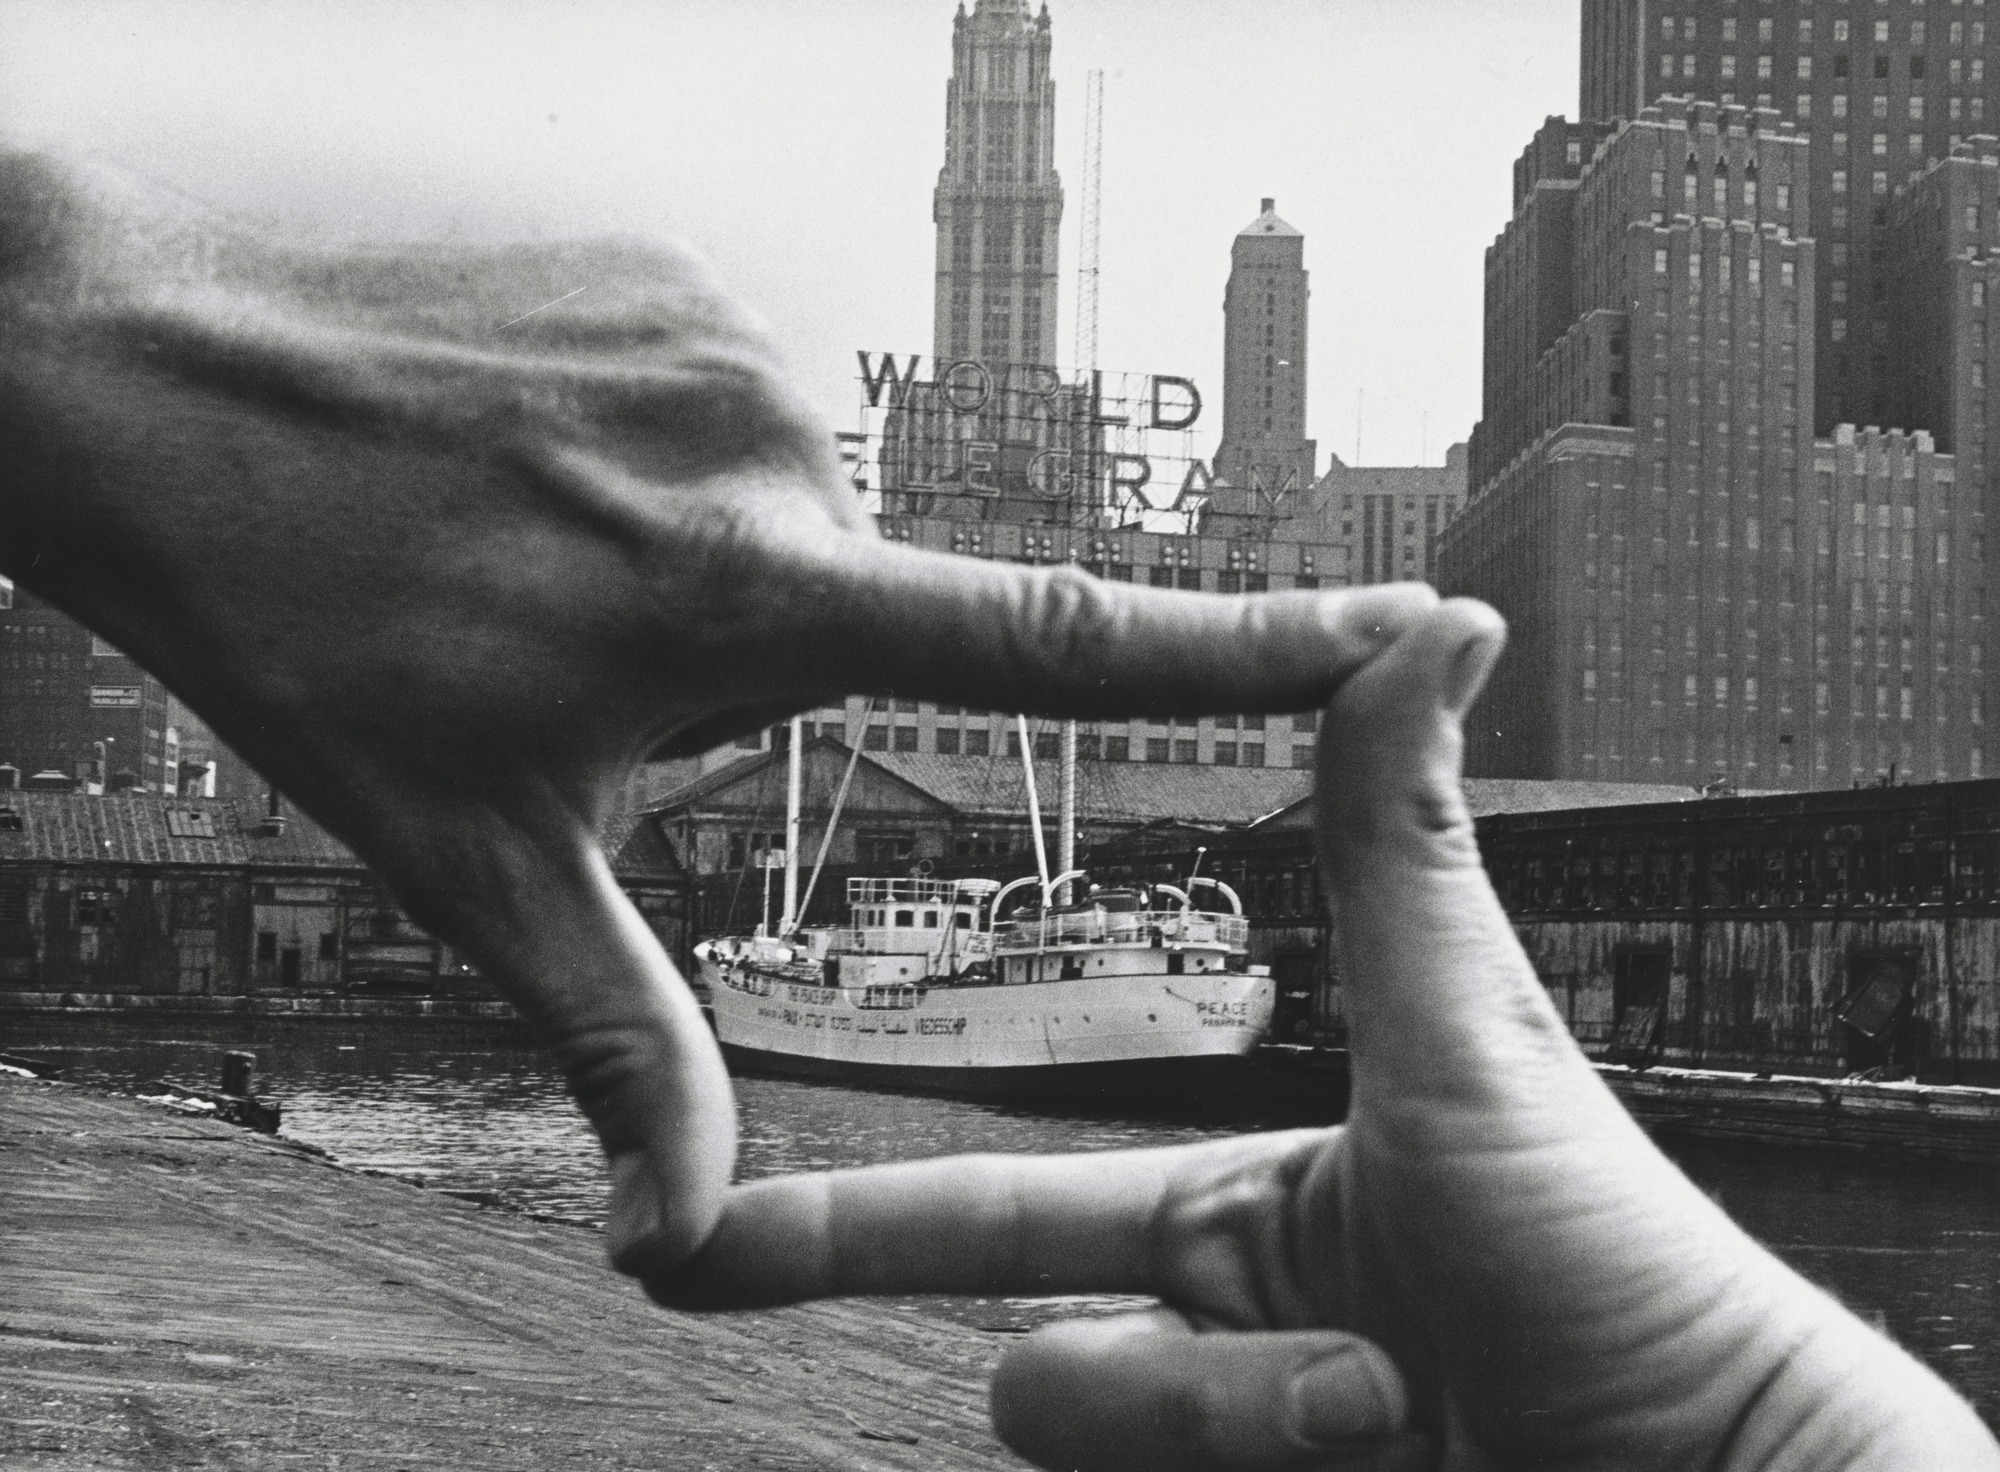 John Baldessari with Harry Shunk, János Kender, Hands Framing New York Harbor, 1971 - © 2018 John Baldessari. Photograph: Shunk-Kender © J. Paul Getty Trust. The Getty Research Institute, Los Angeles